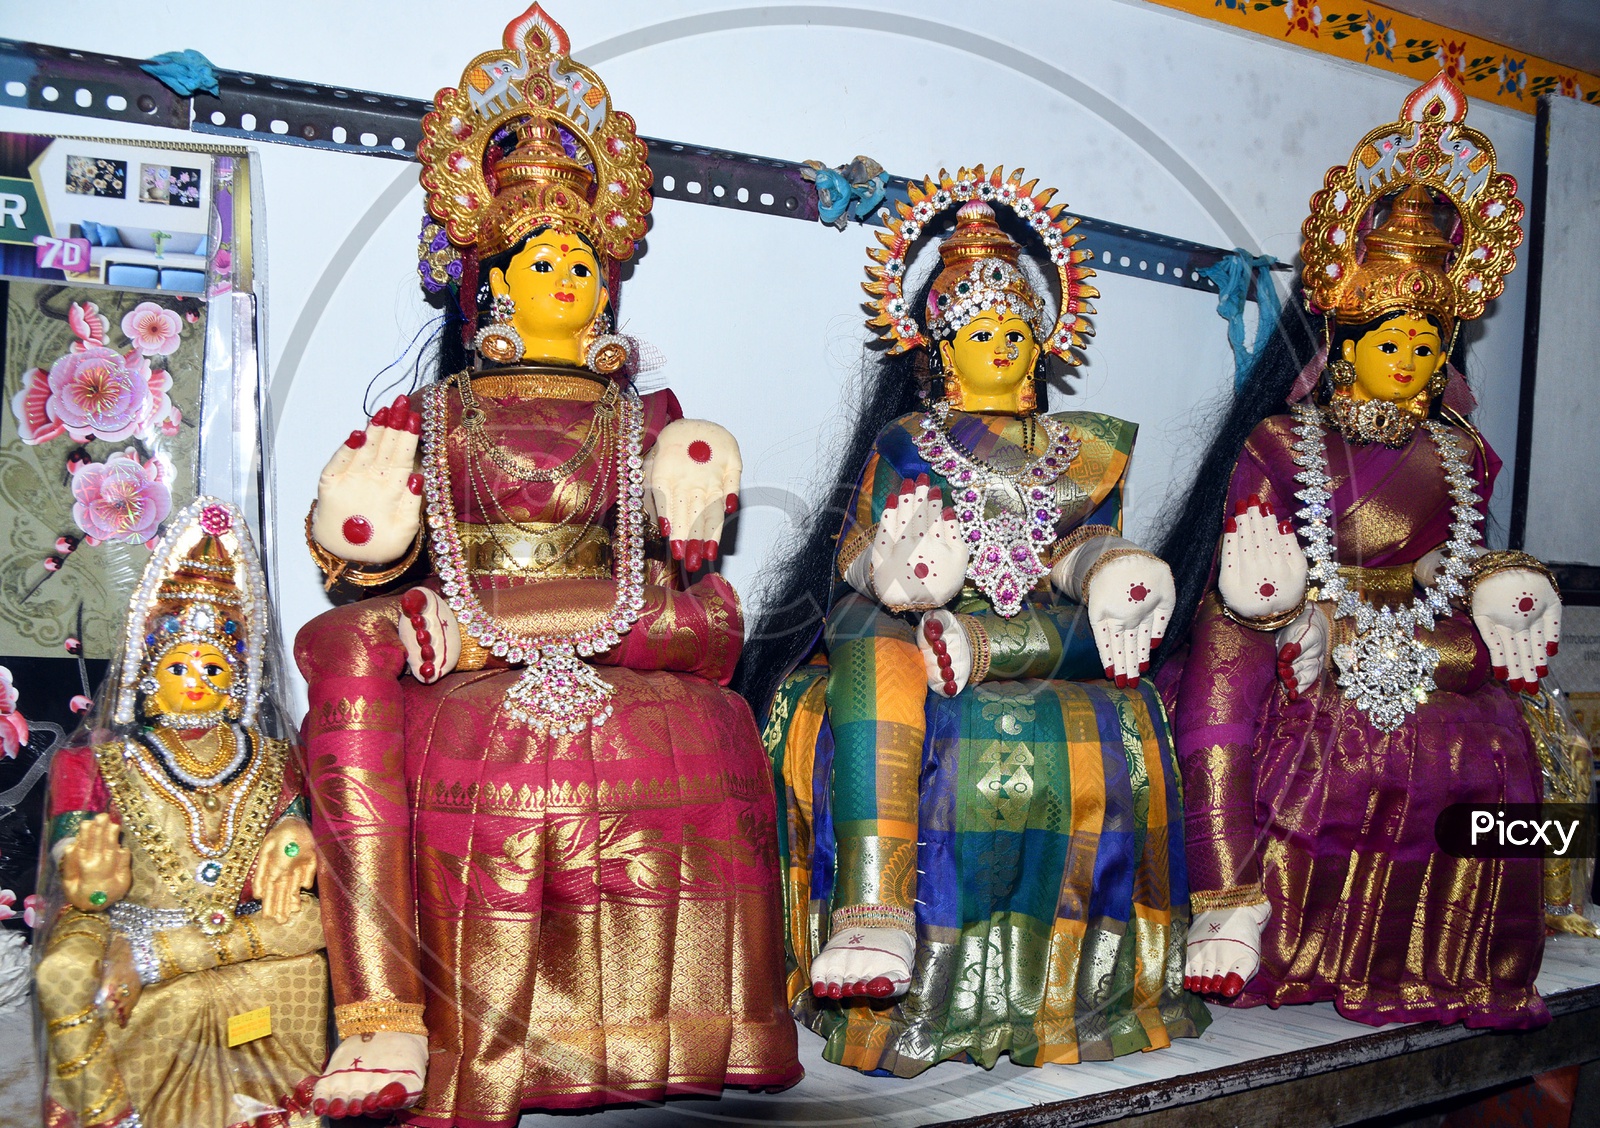 Decorated Indian Hindu Goddess Statues